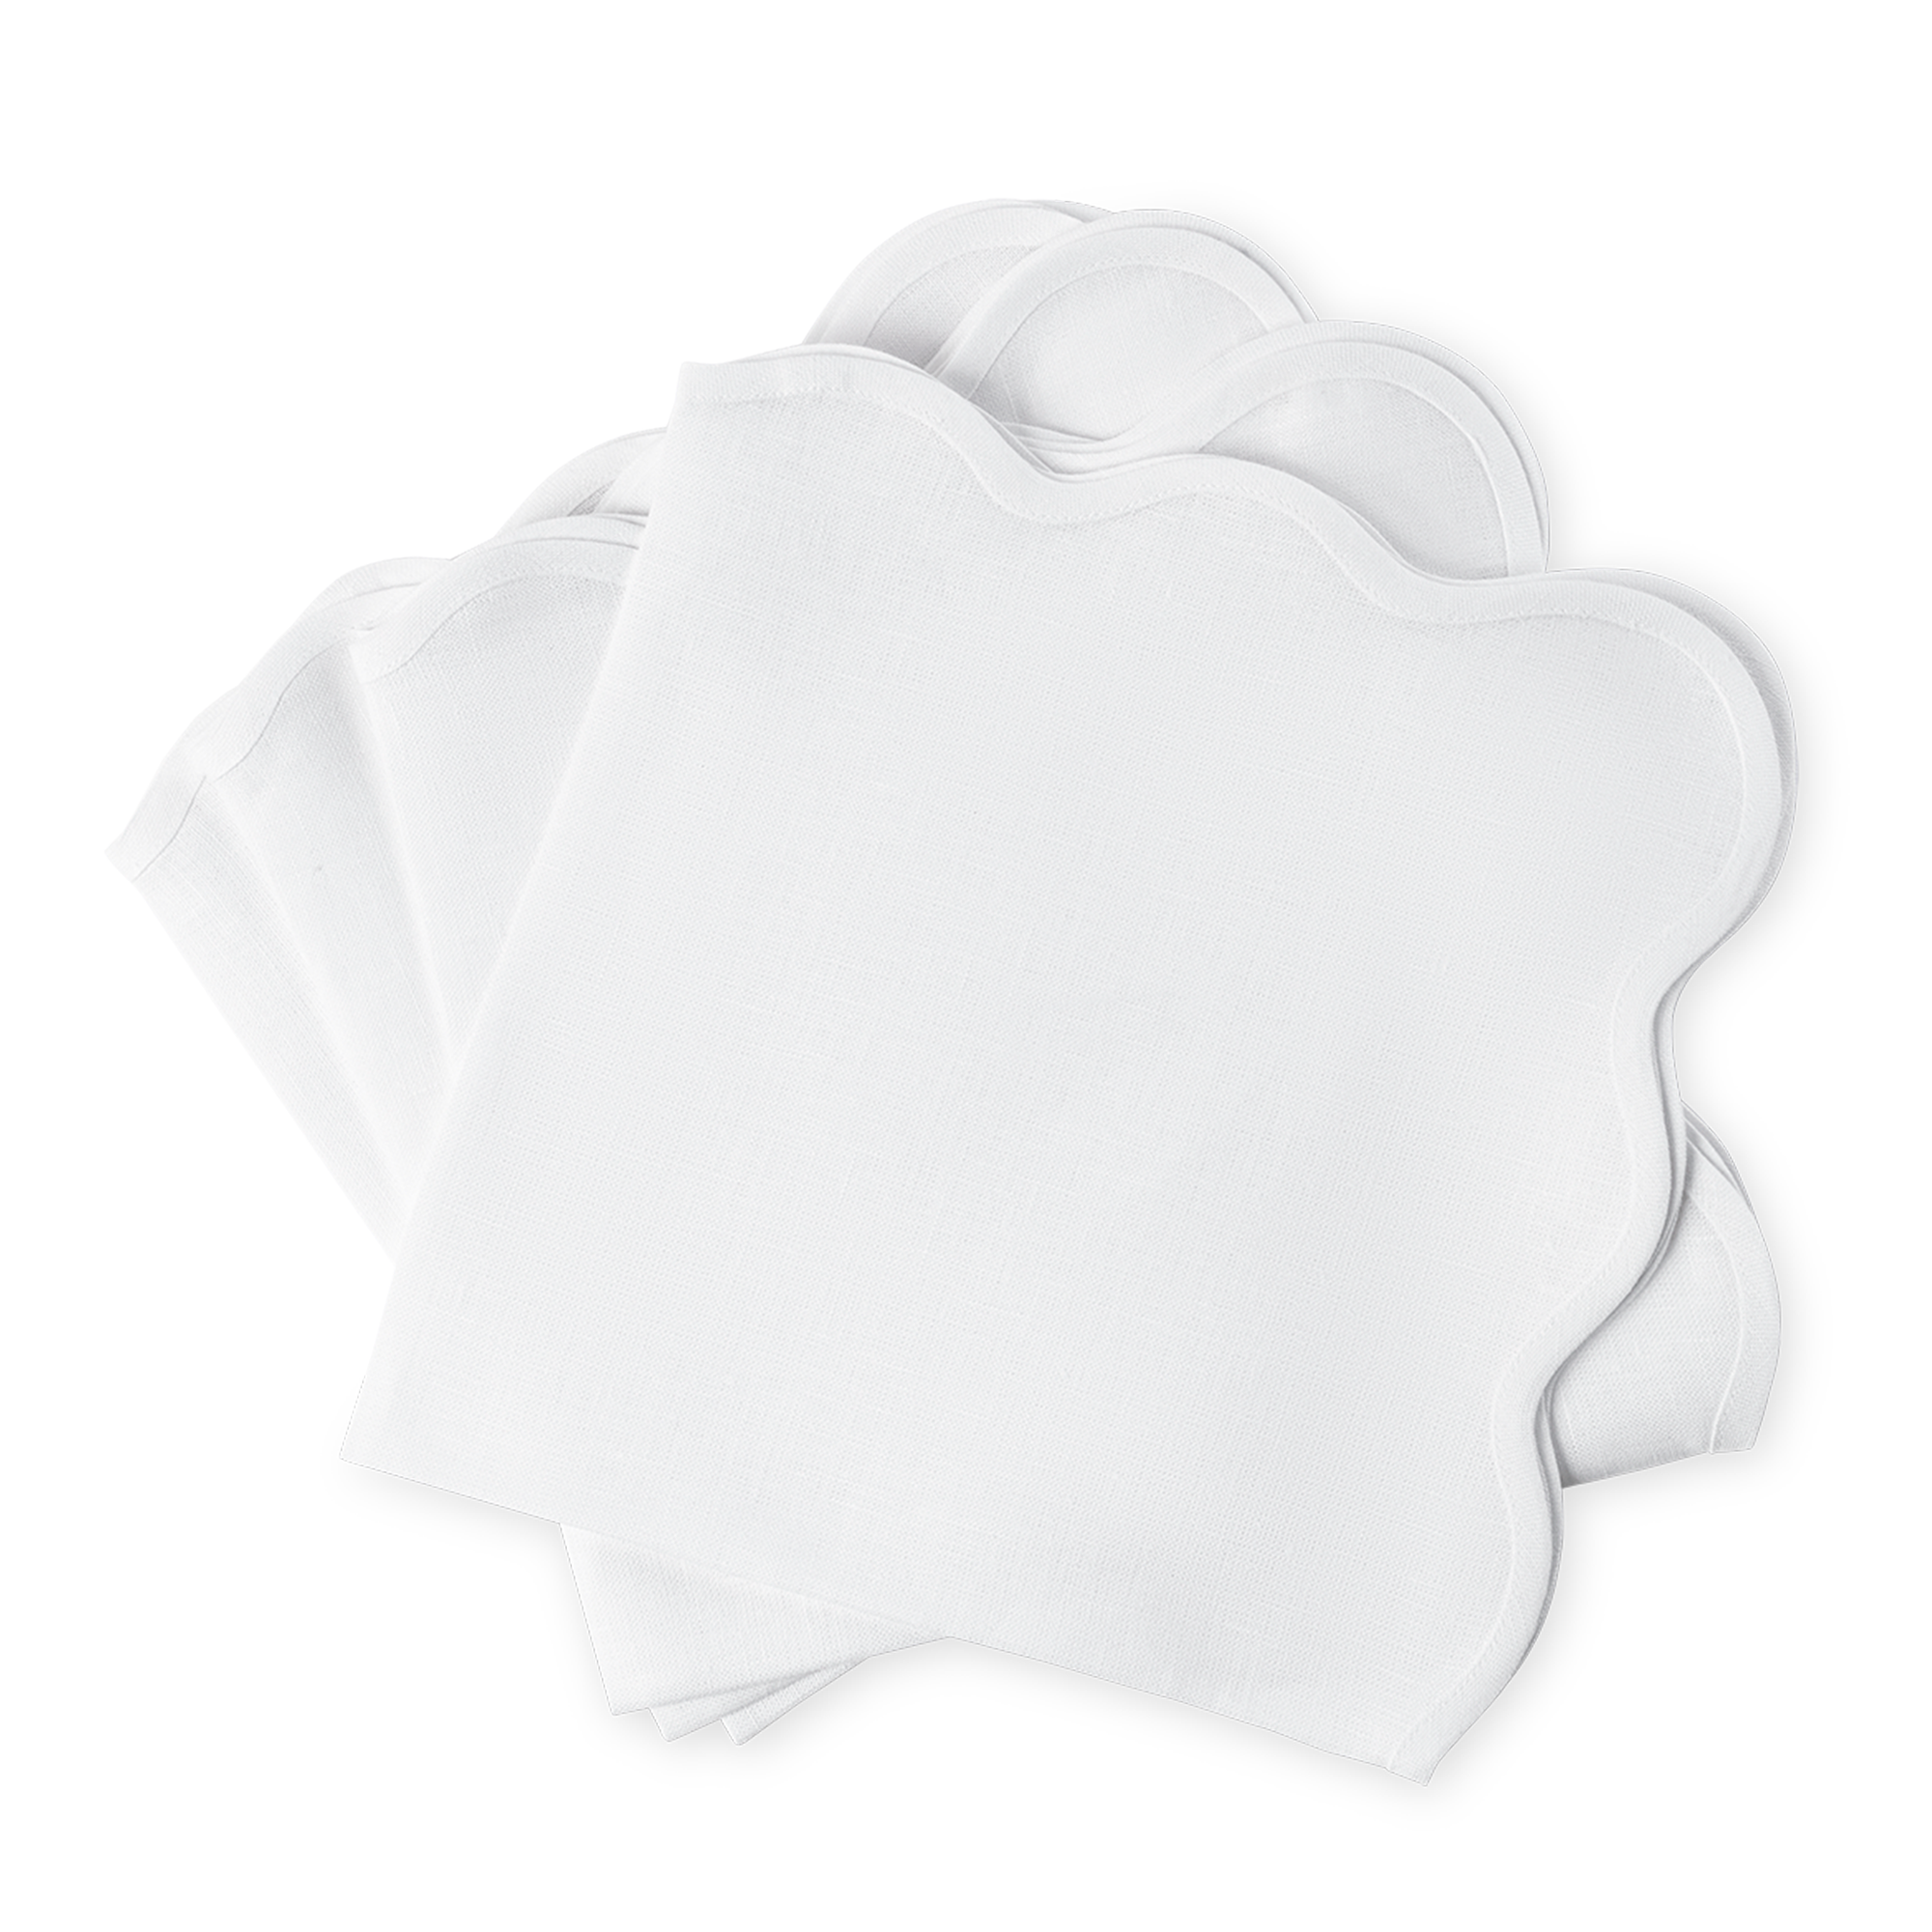 Dinner Napkins of Matouk Scallop Edge Table Linens in Color White/White